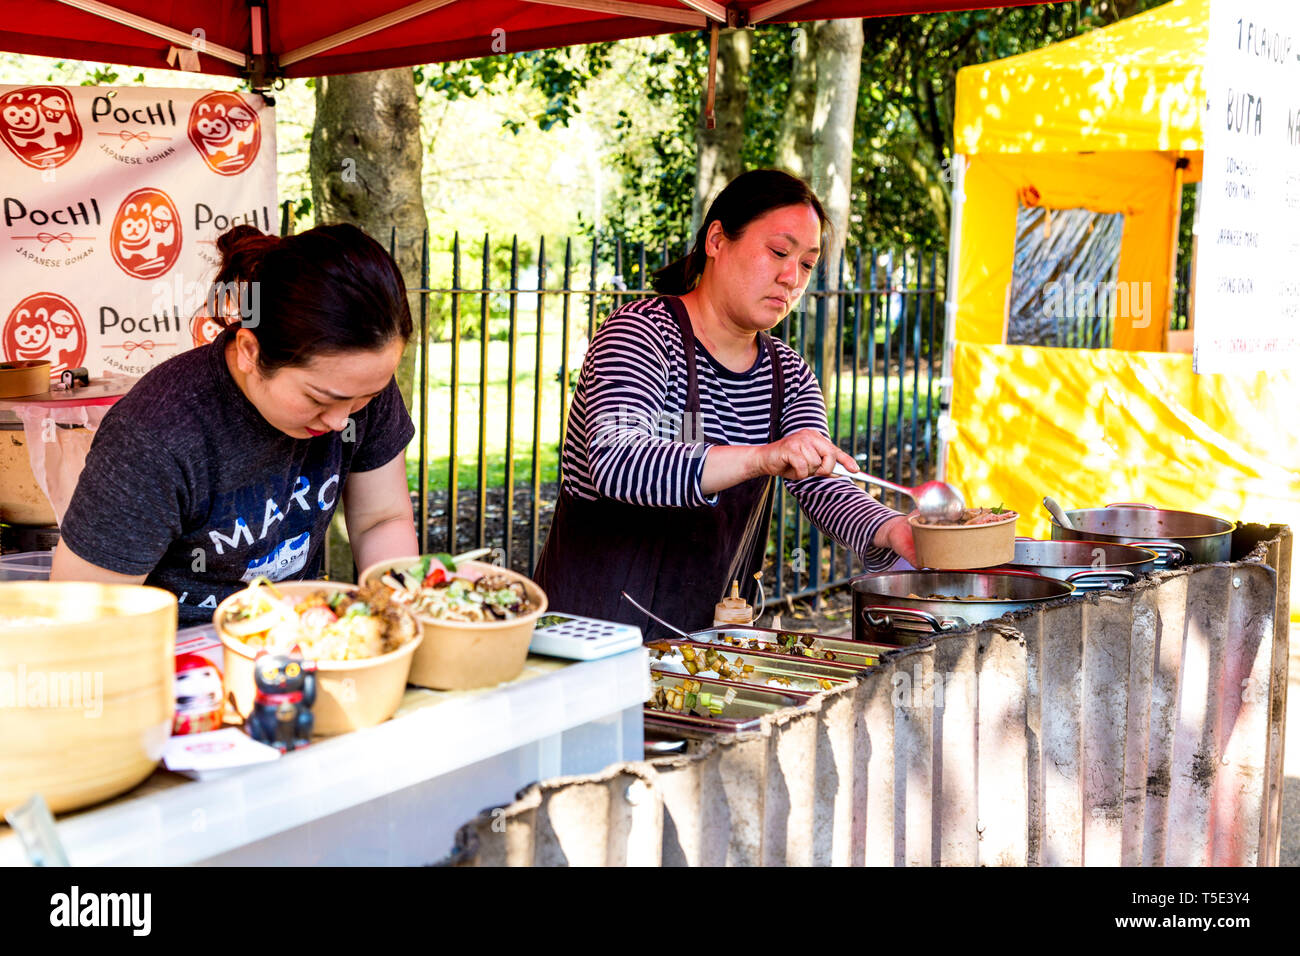 Japanese street food Pochi, woman serving bento rice bowls at Victoria Park Market, London, UK Stock Photo